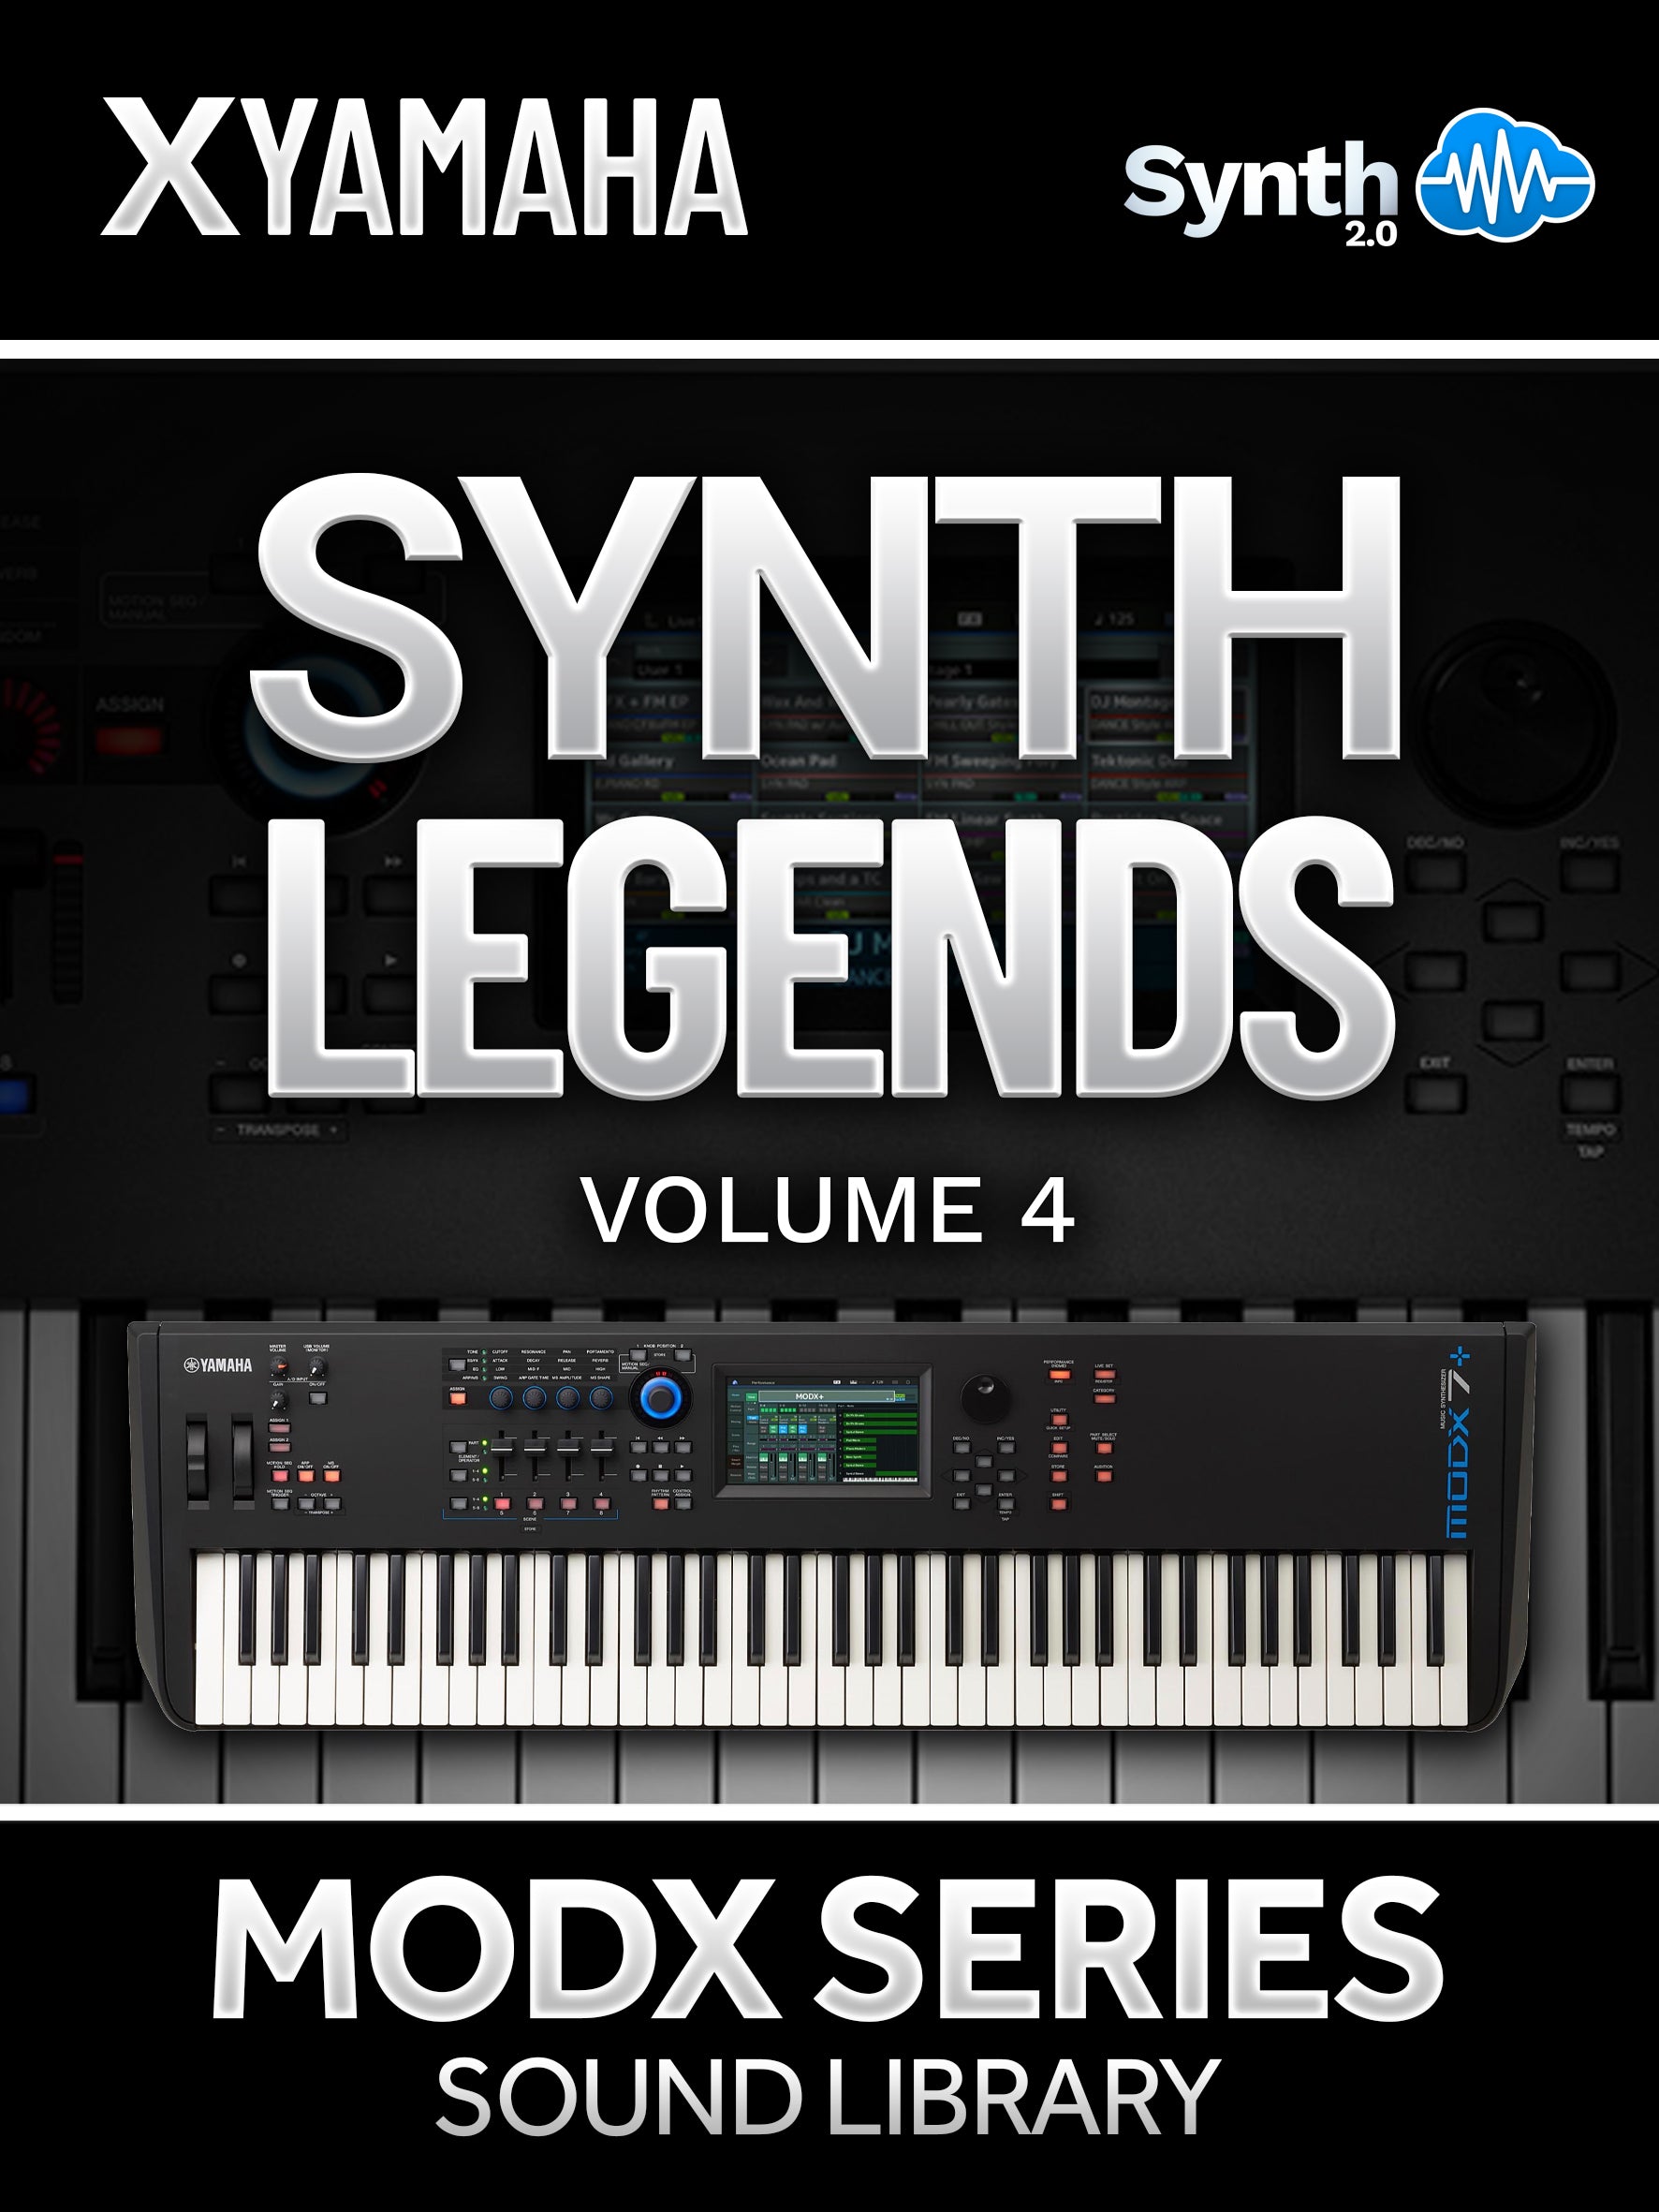 SLG004 - Synth Legends V4 - Yamaha MODX / MODX+ ( 16 presets )